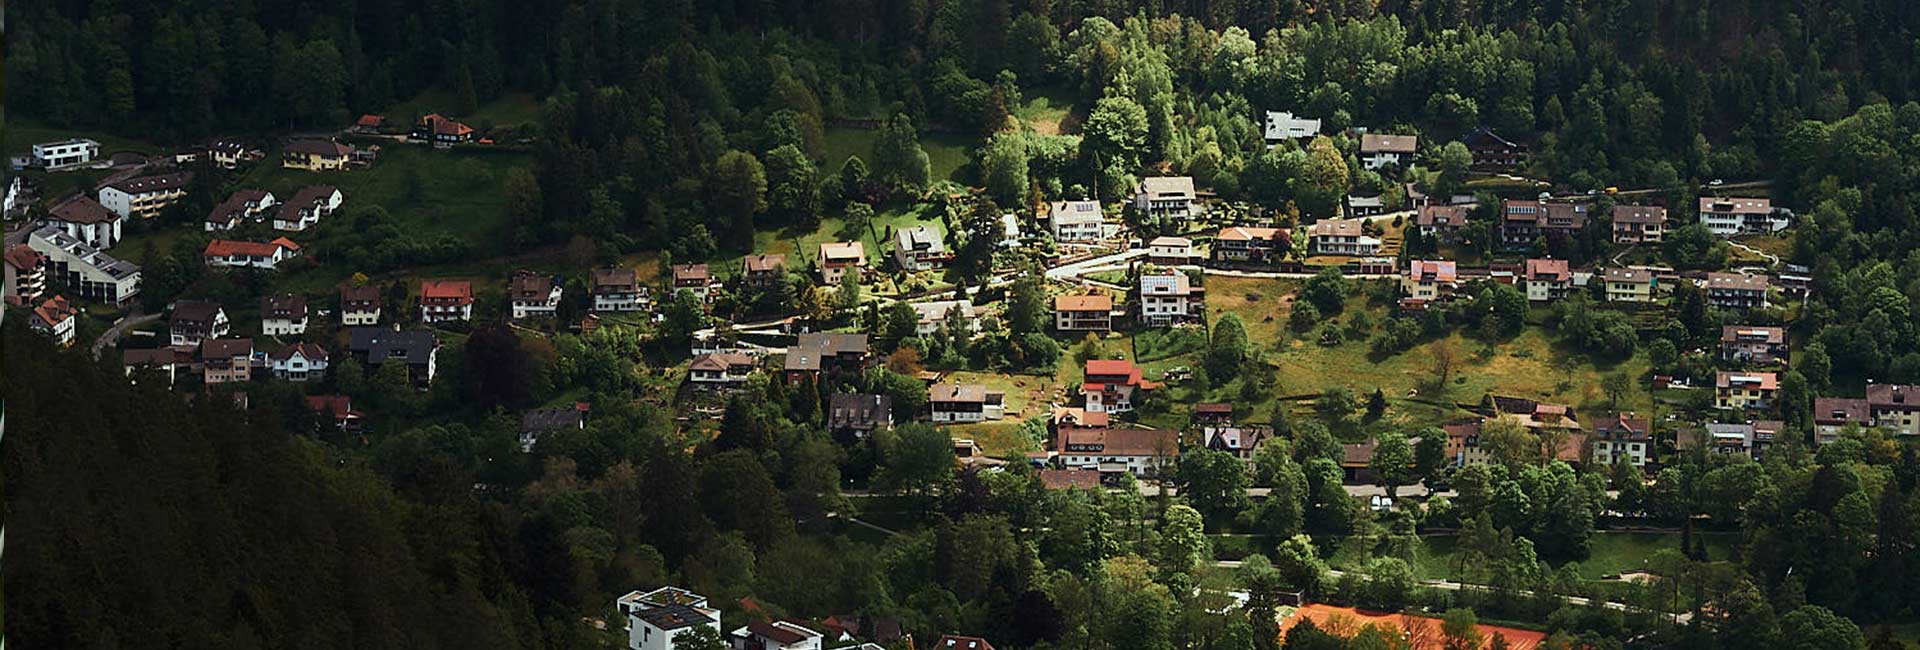 Luftaufnahme Todtnau im Schwarzwald